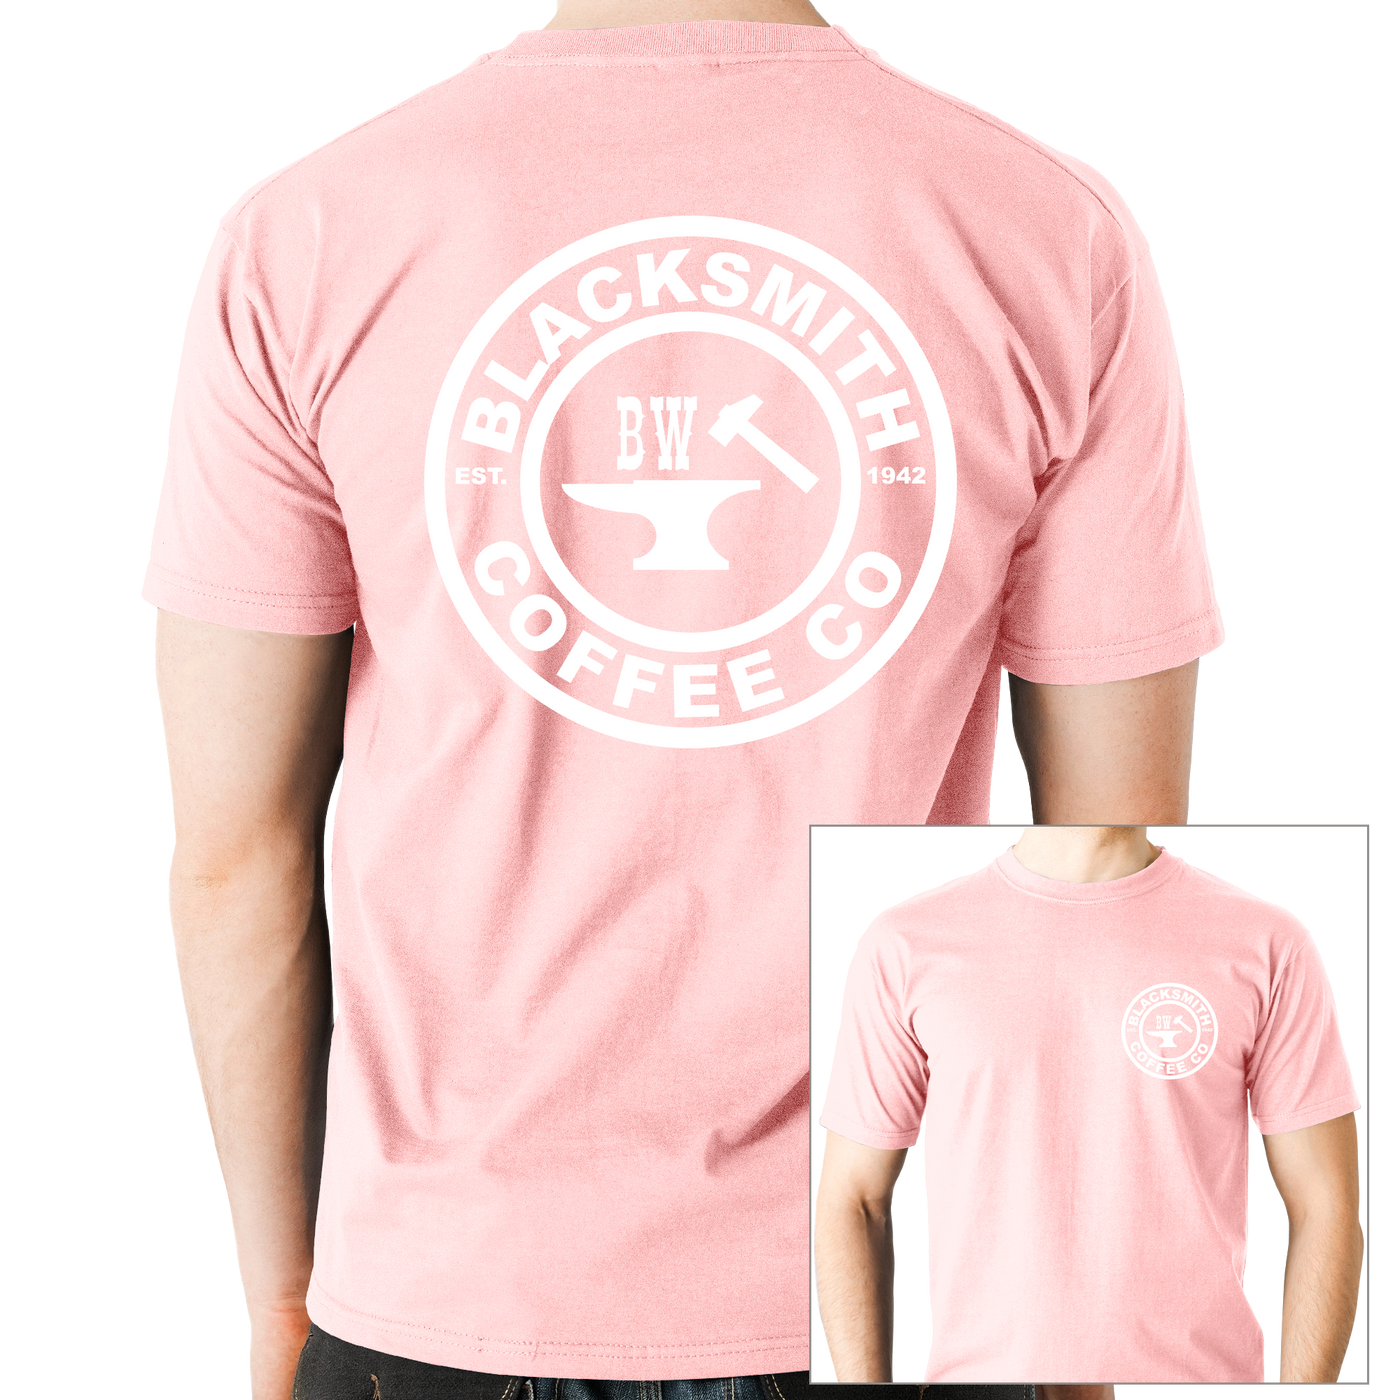 BW Blacksmith (Signature Series) Cotton T-Shirt: Light Pink